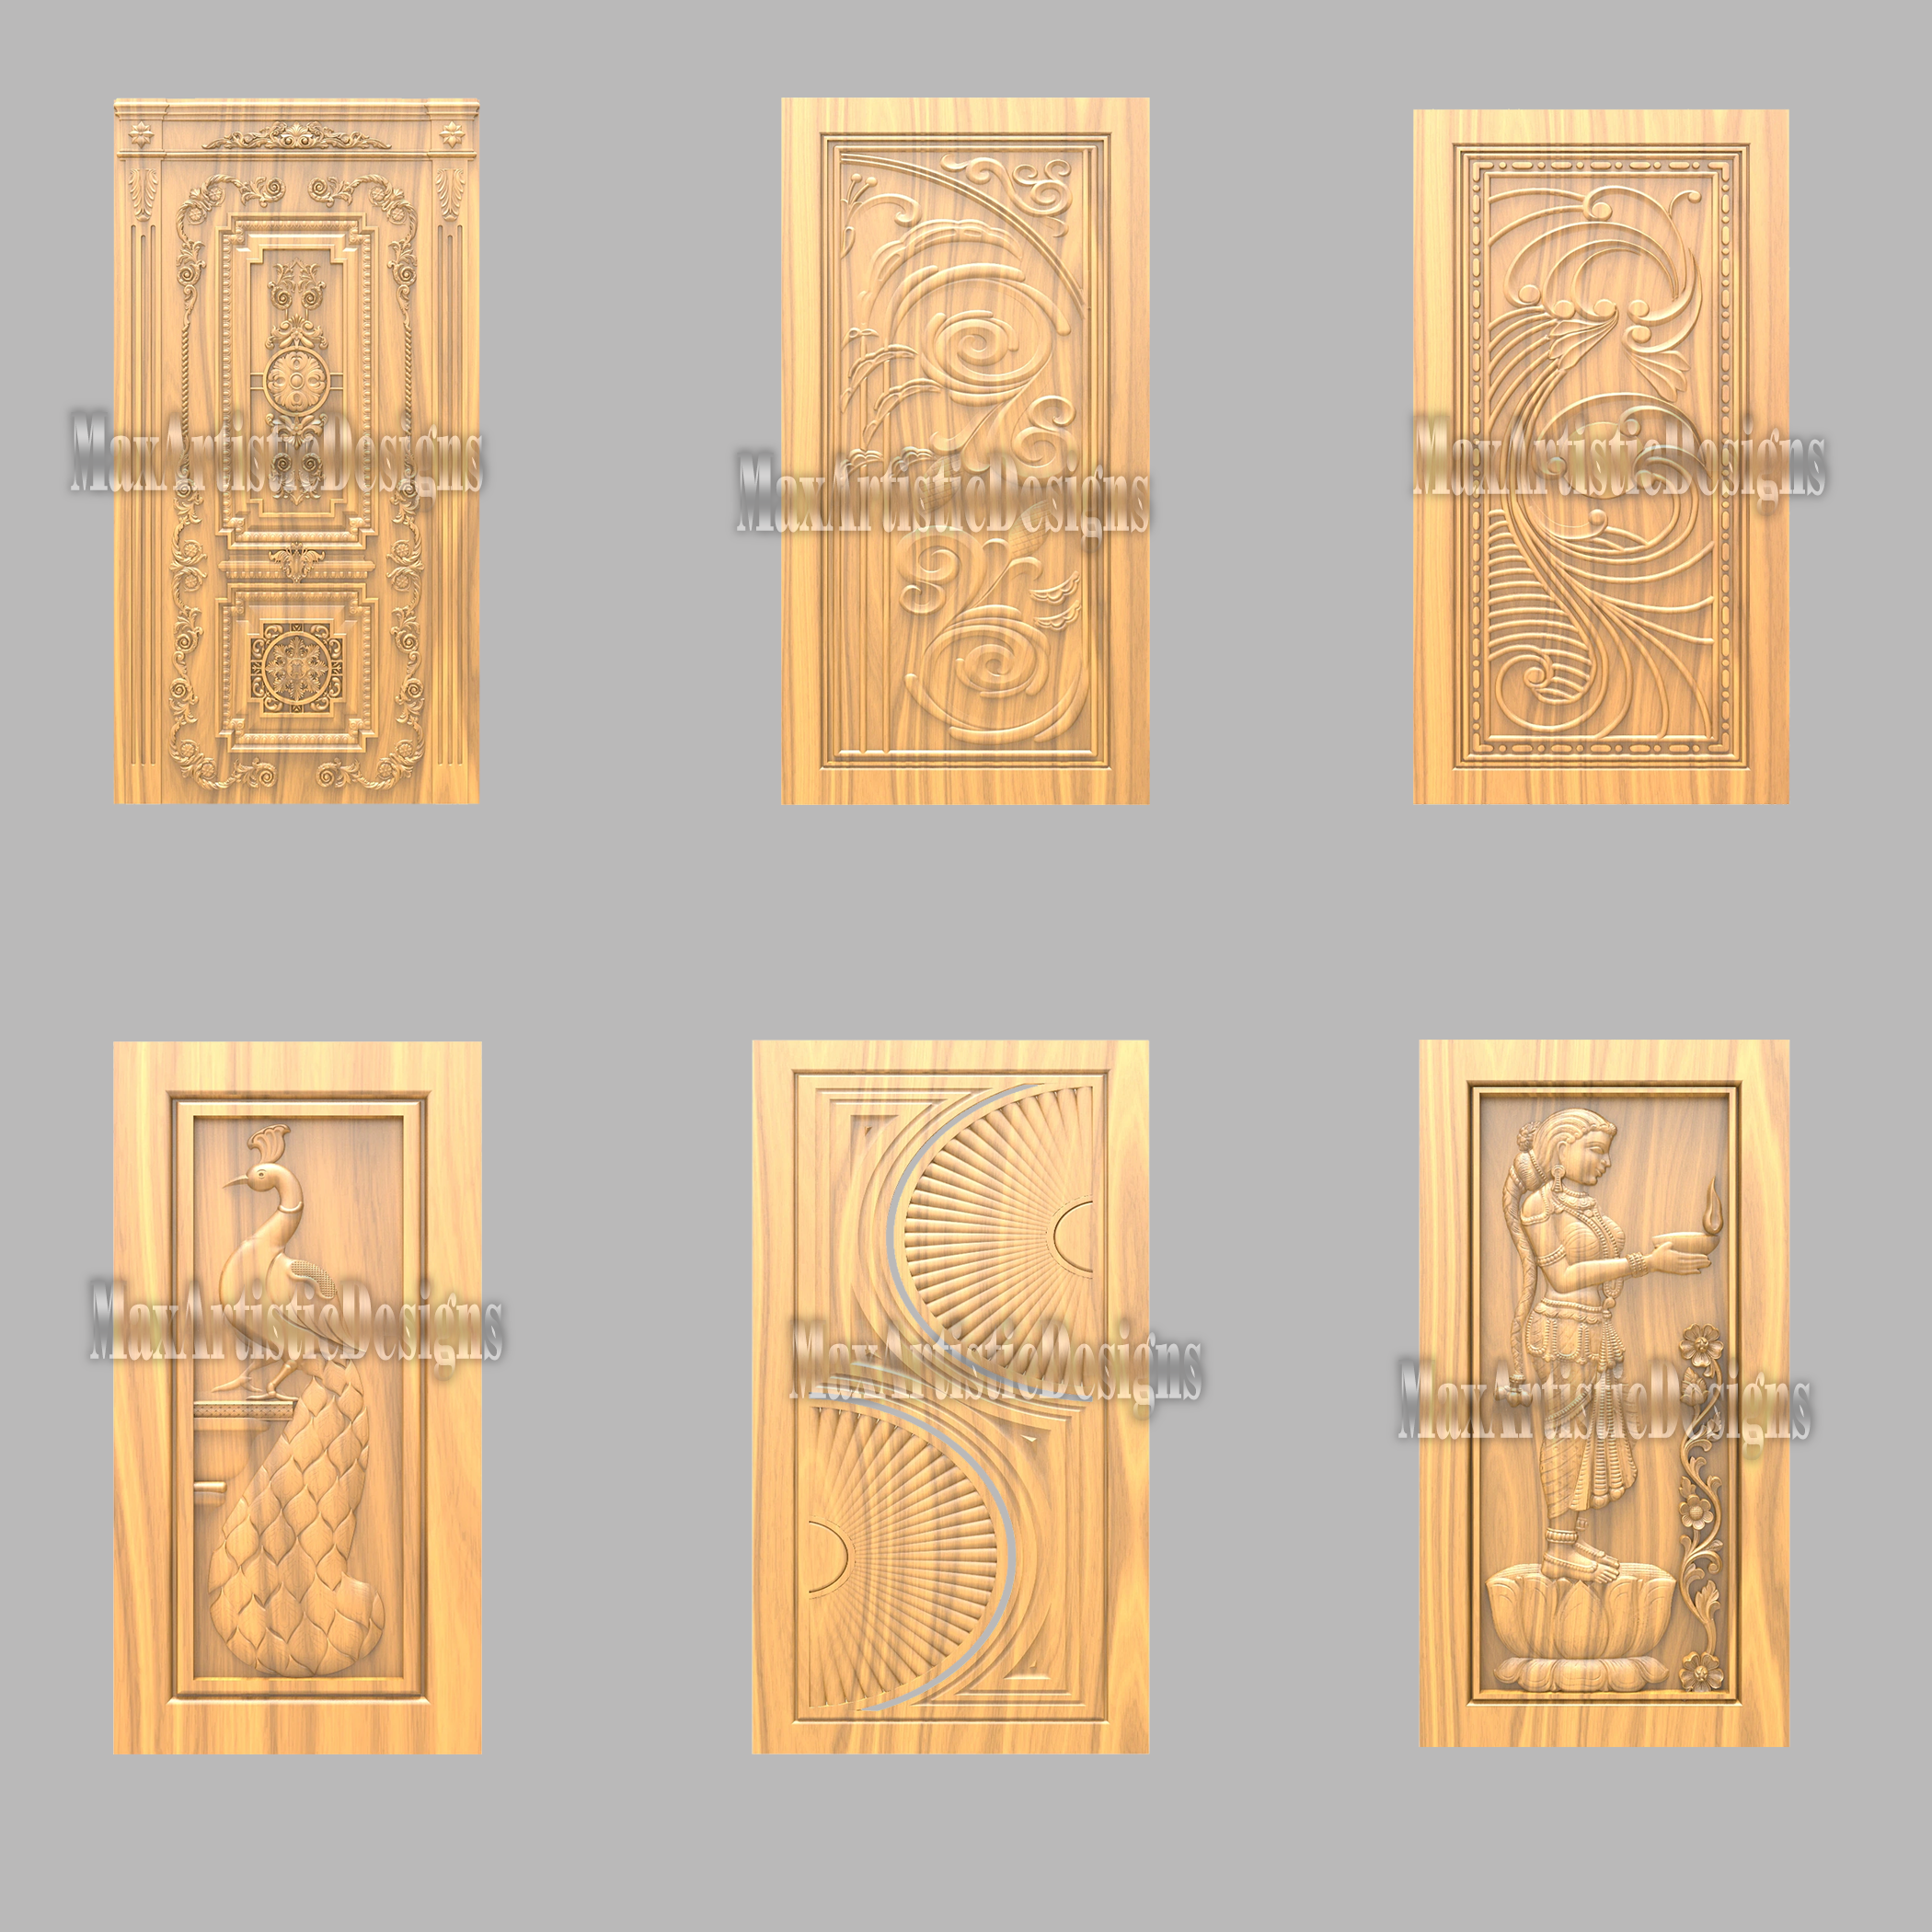 60 wooden door cnc router engraving designs for artcam 3d relif files in rlf stl formats digital download